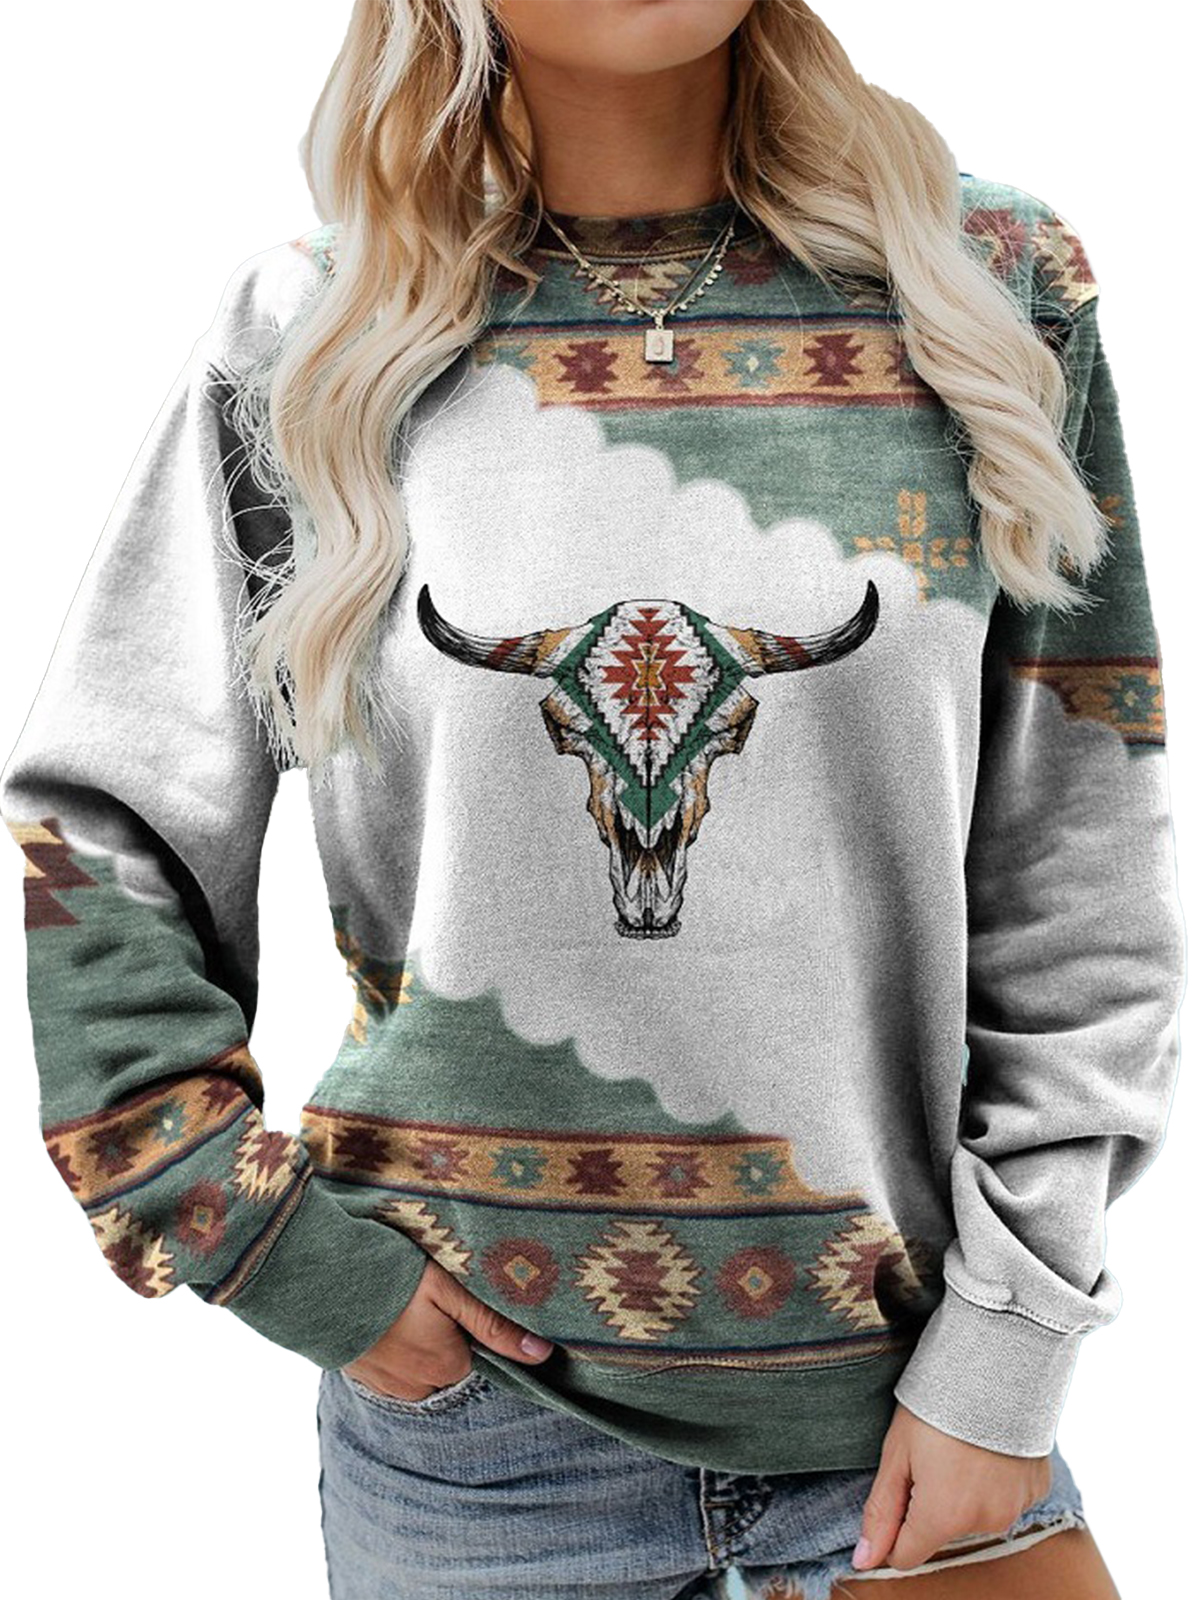 Women's Retro Western Ethnic Chic Printed Sweater